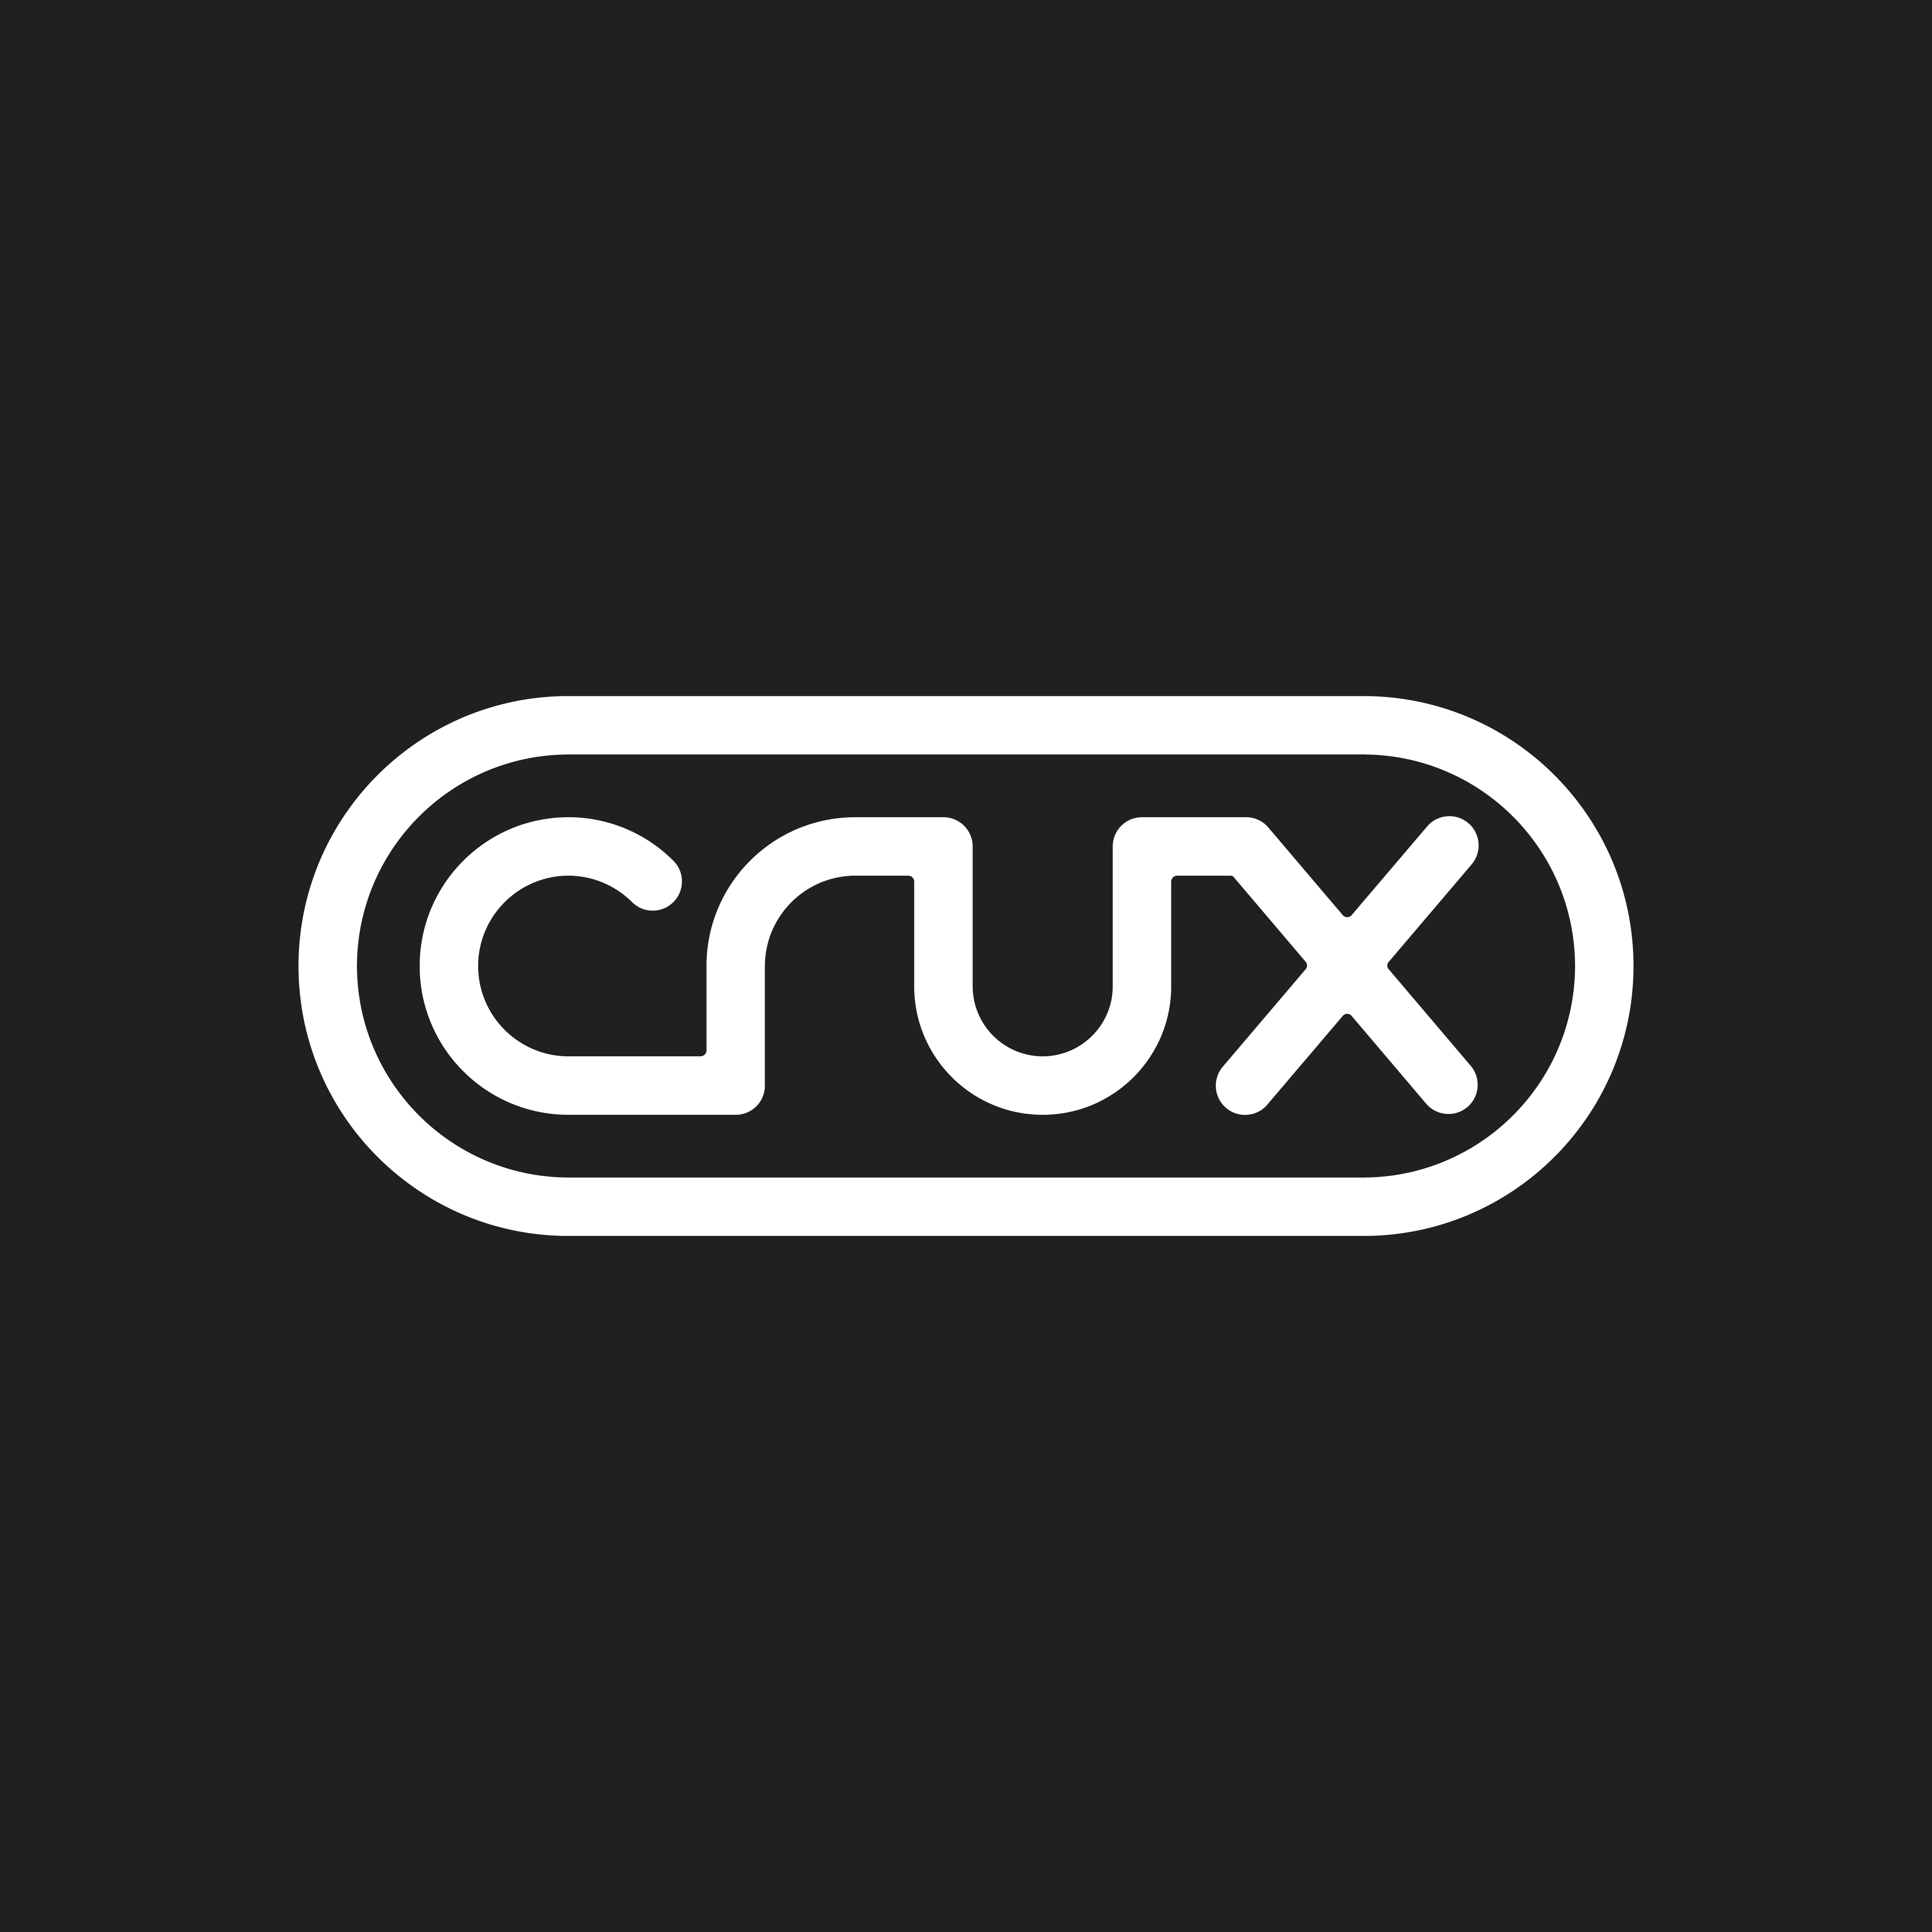 Crux Product Design Ltd.